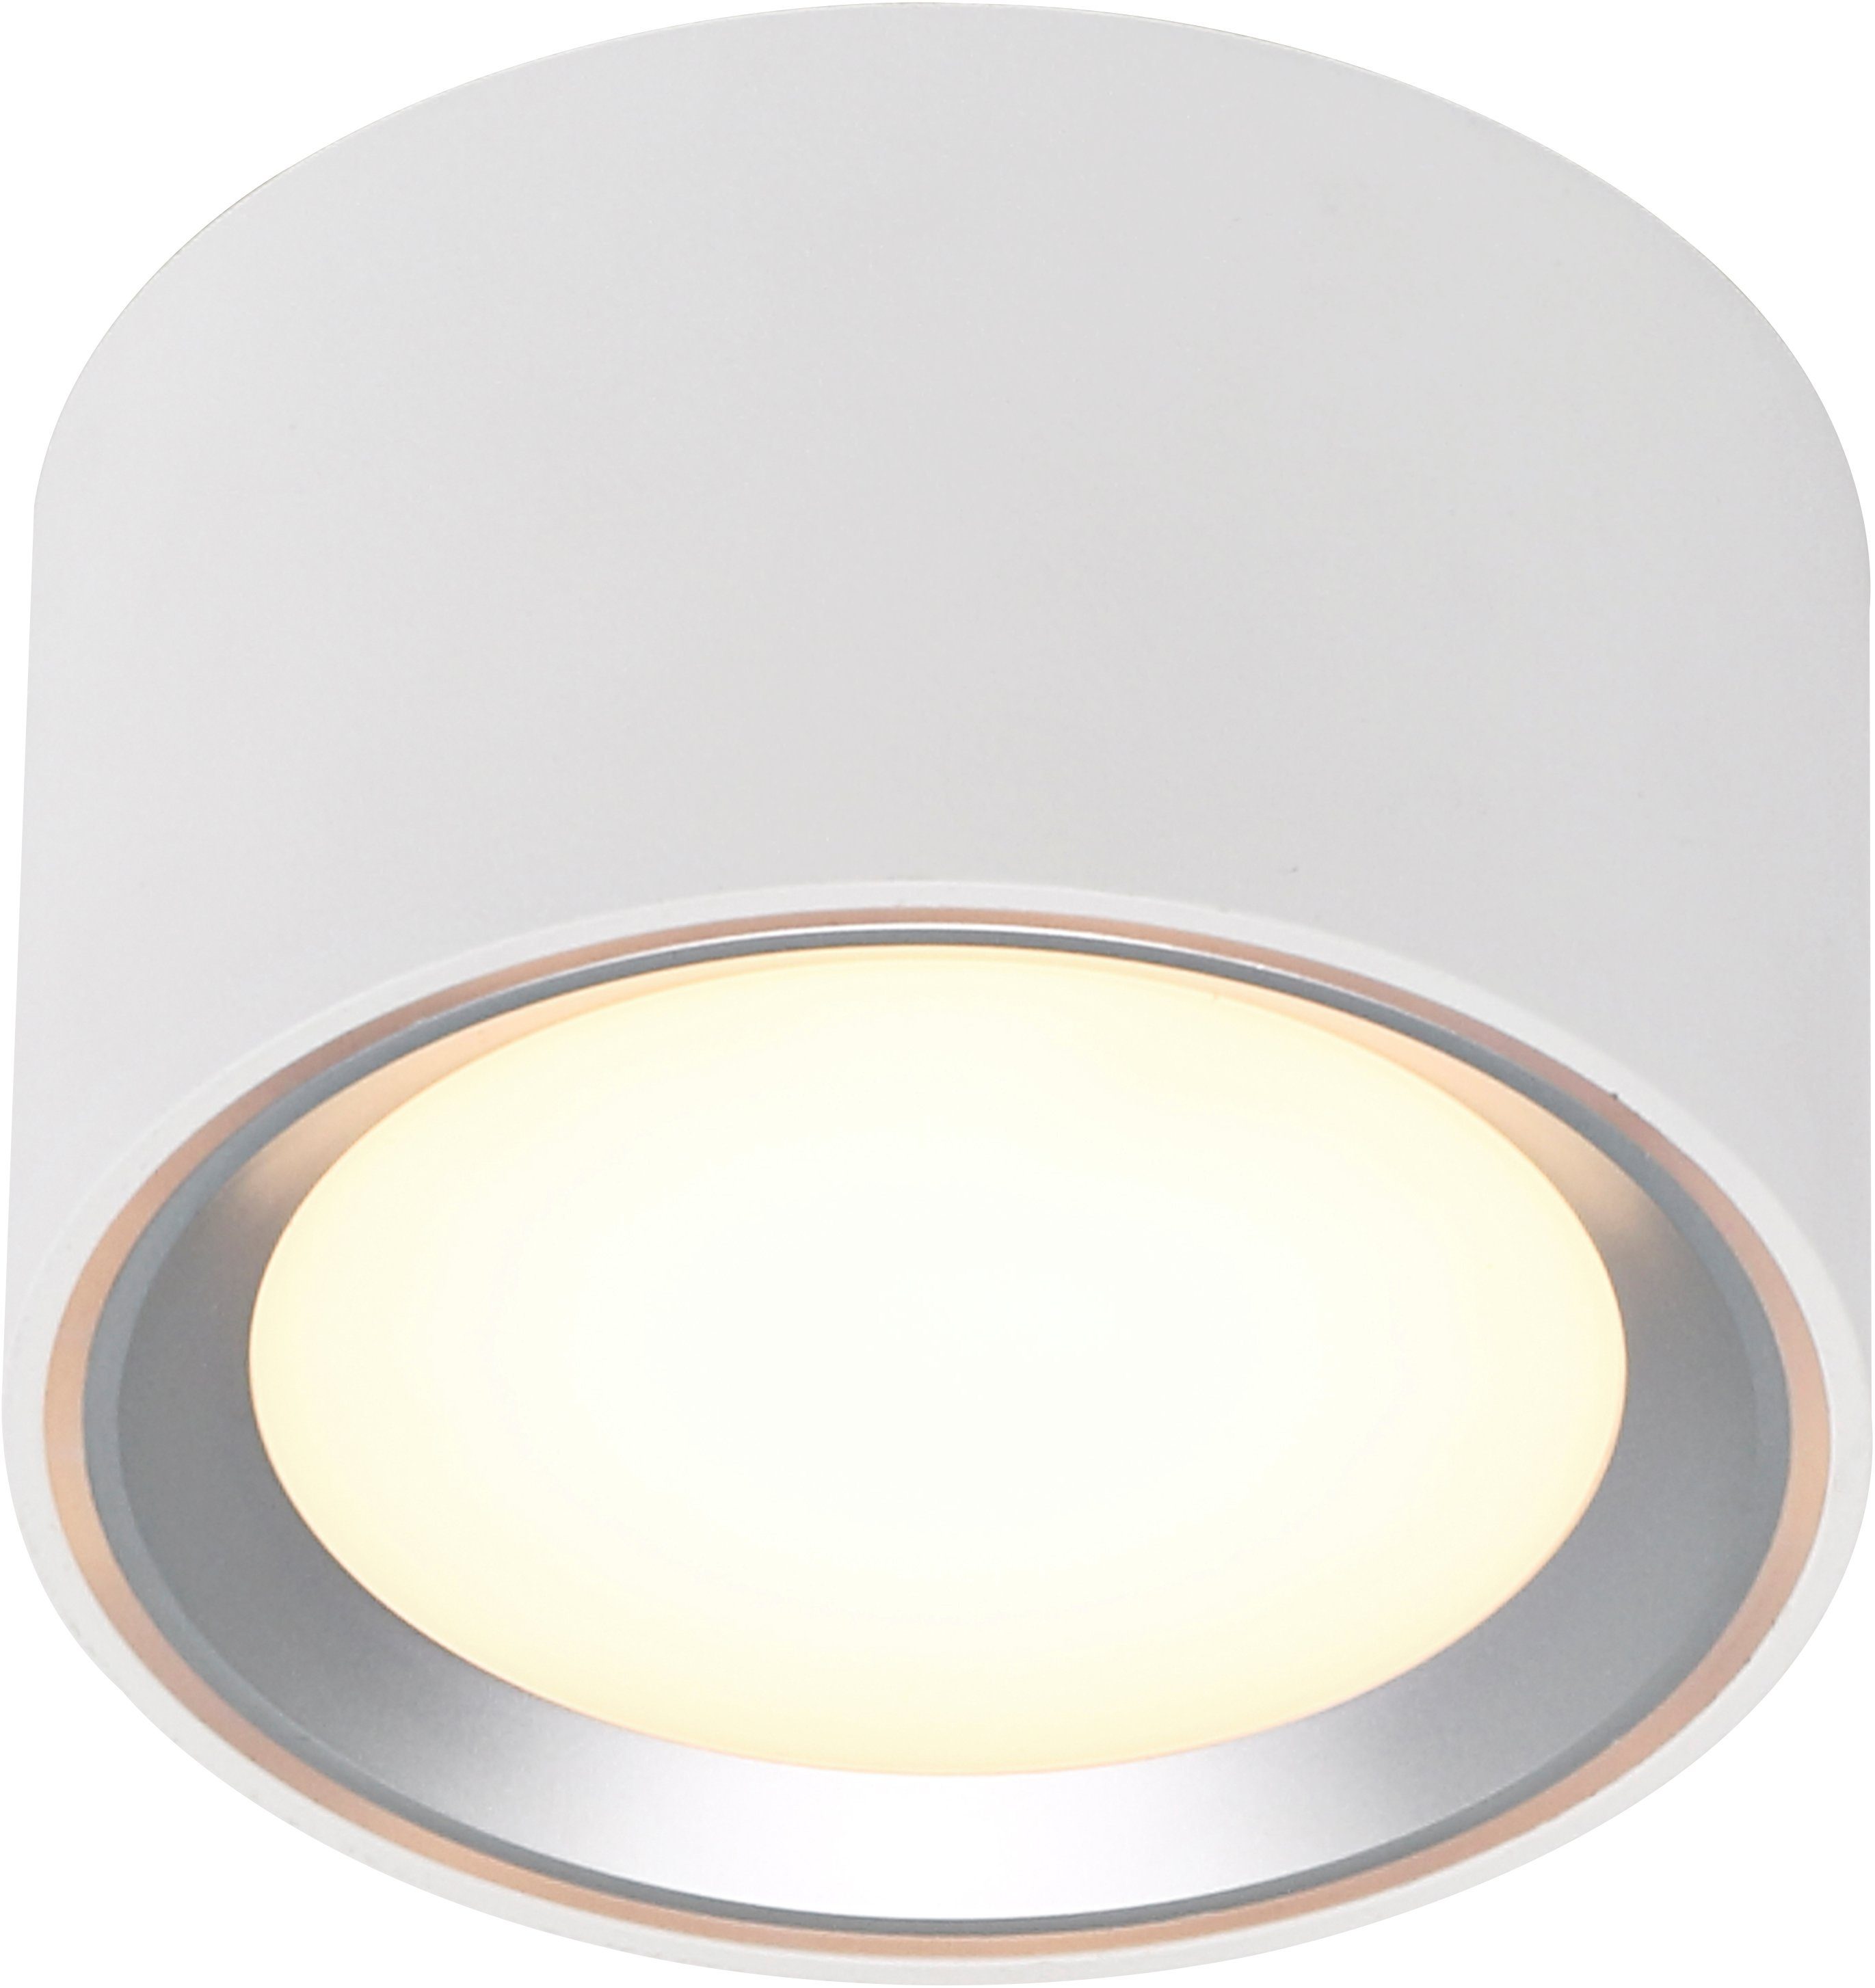 Nordlux LED LED Deckenlampe, LED fest Design integriert, Fallon, unauffälliges LED Dezentes, Dimmfunktion, Deckenspot Deckenleuchte, Warmweiß